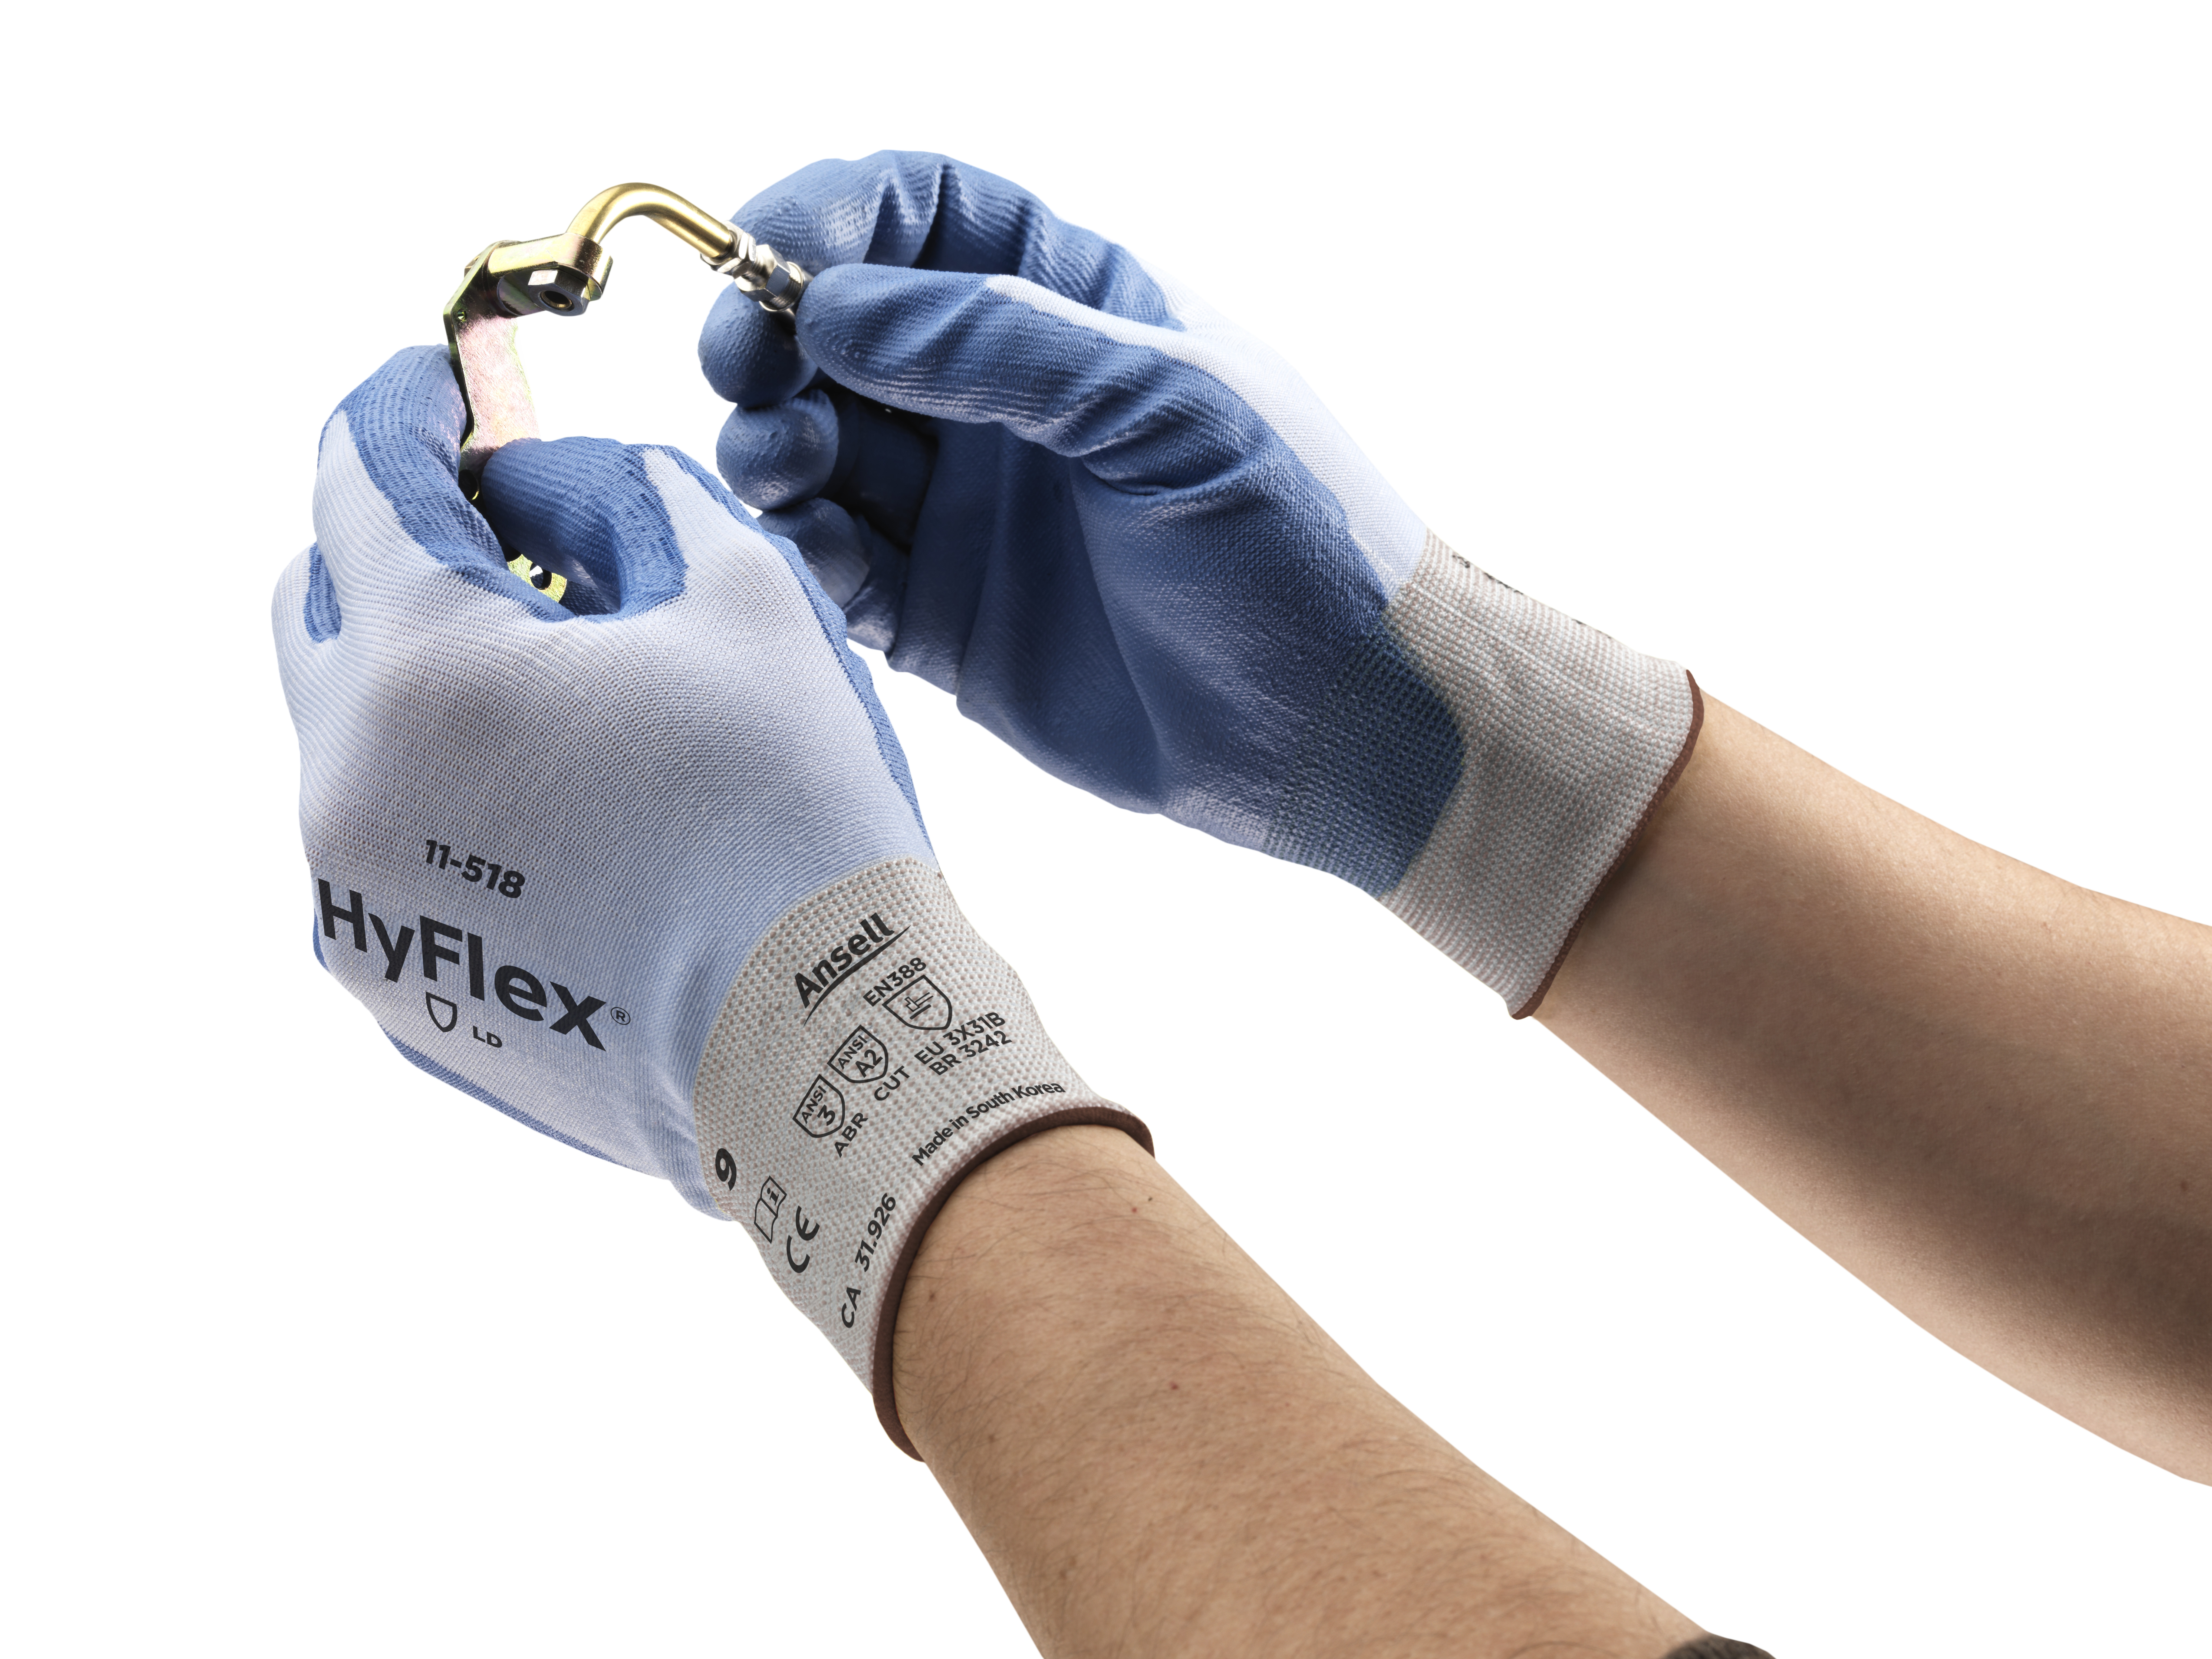 Ansell - Handschuh HyFlex 11-518 Schnittschutzhandschuh